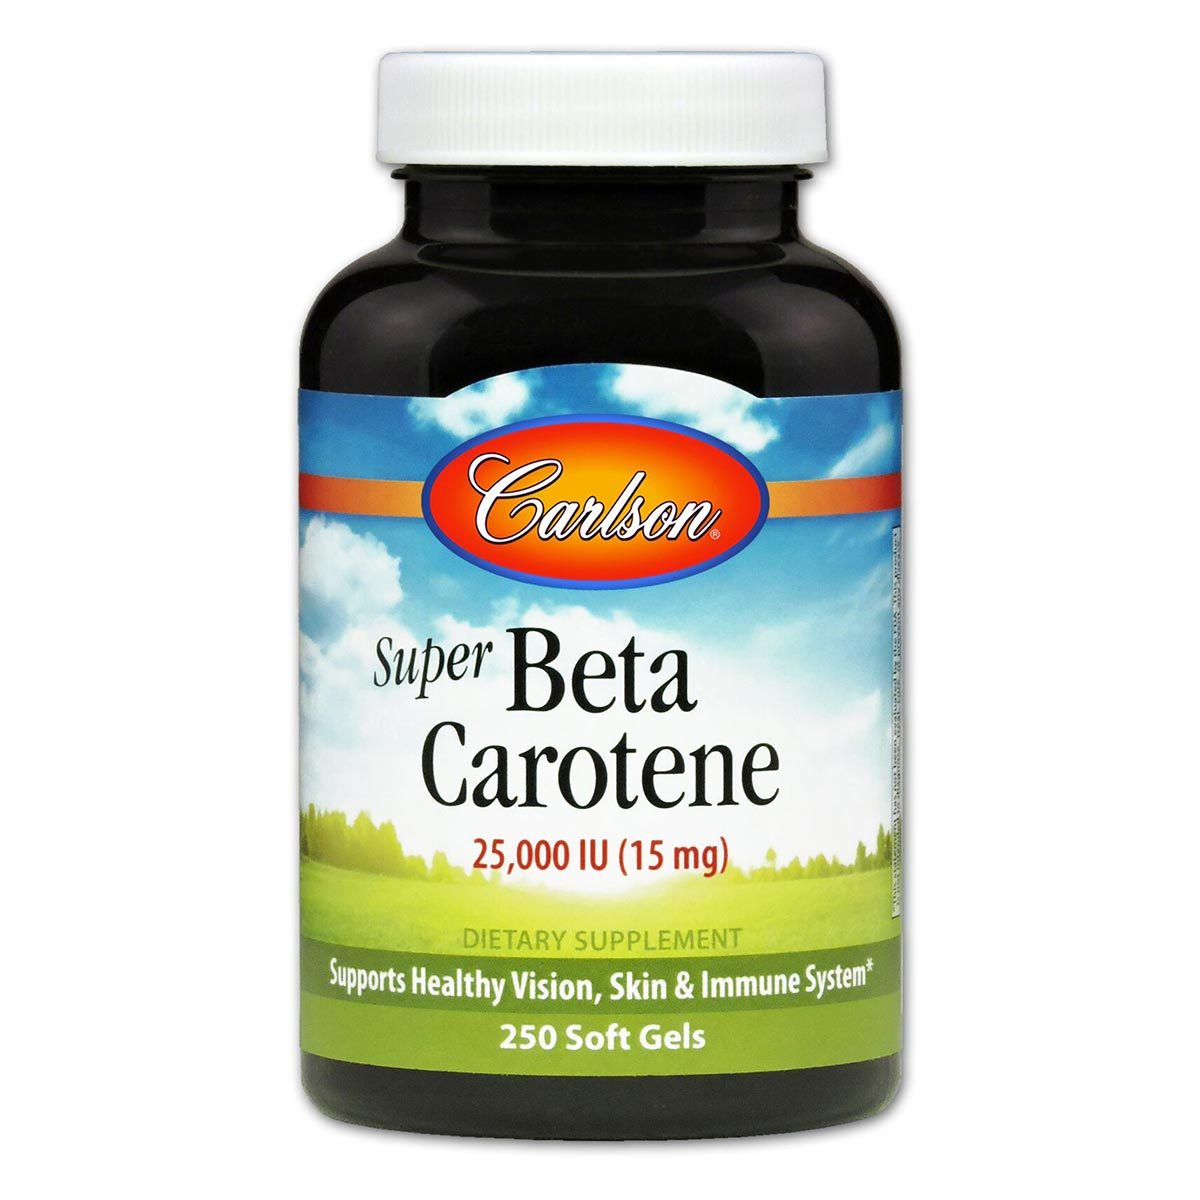 Primary image of Super Beta Carotene